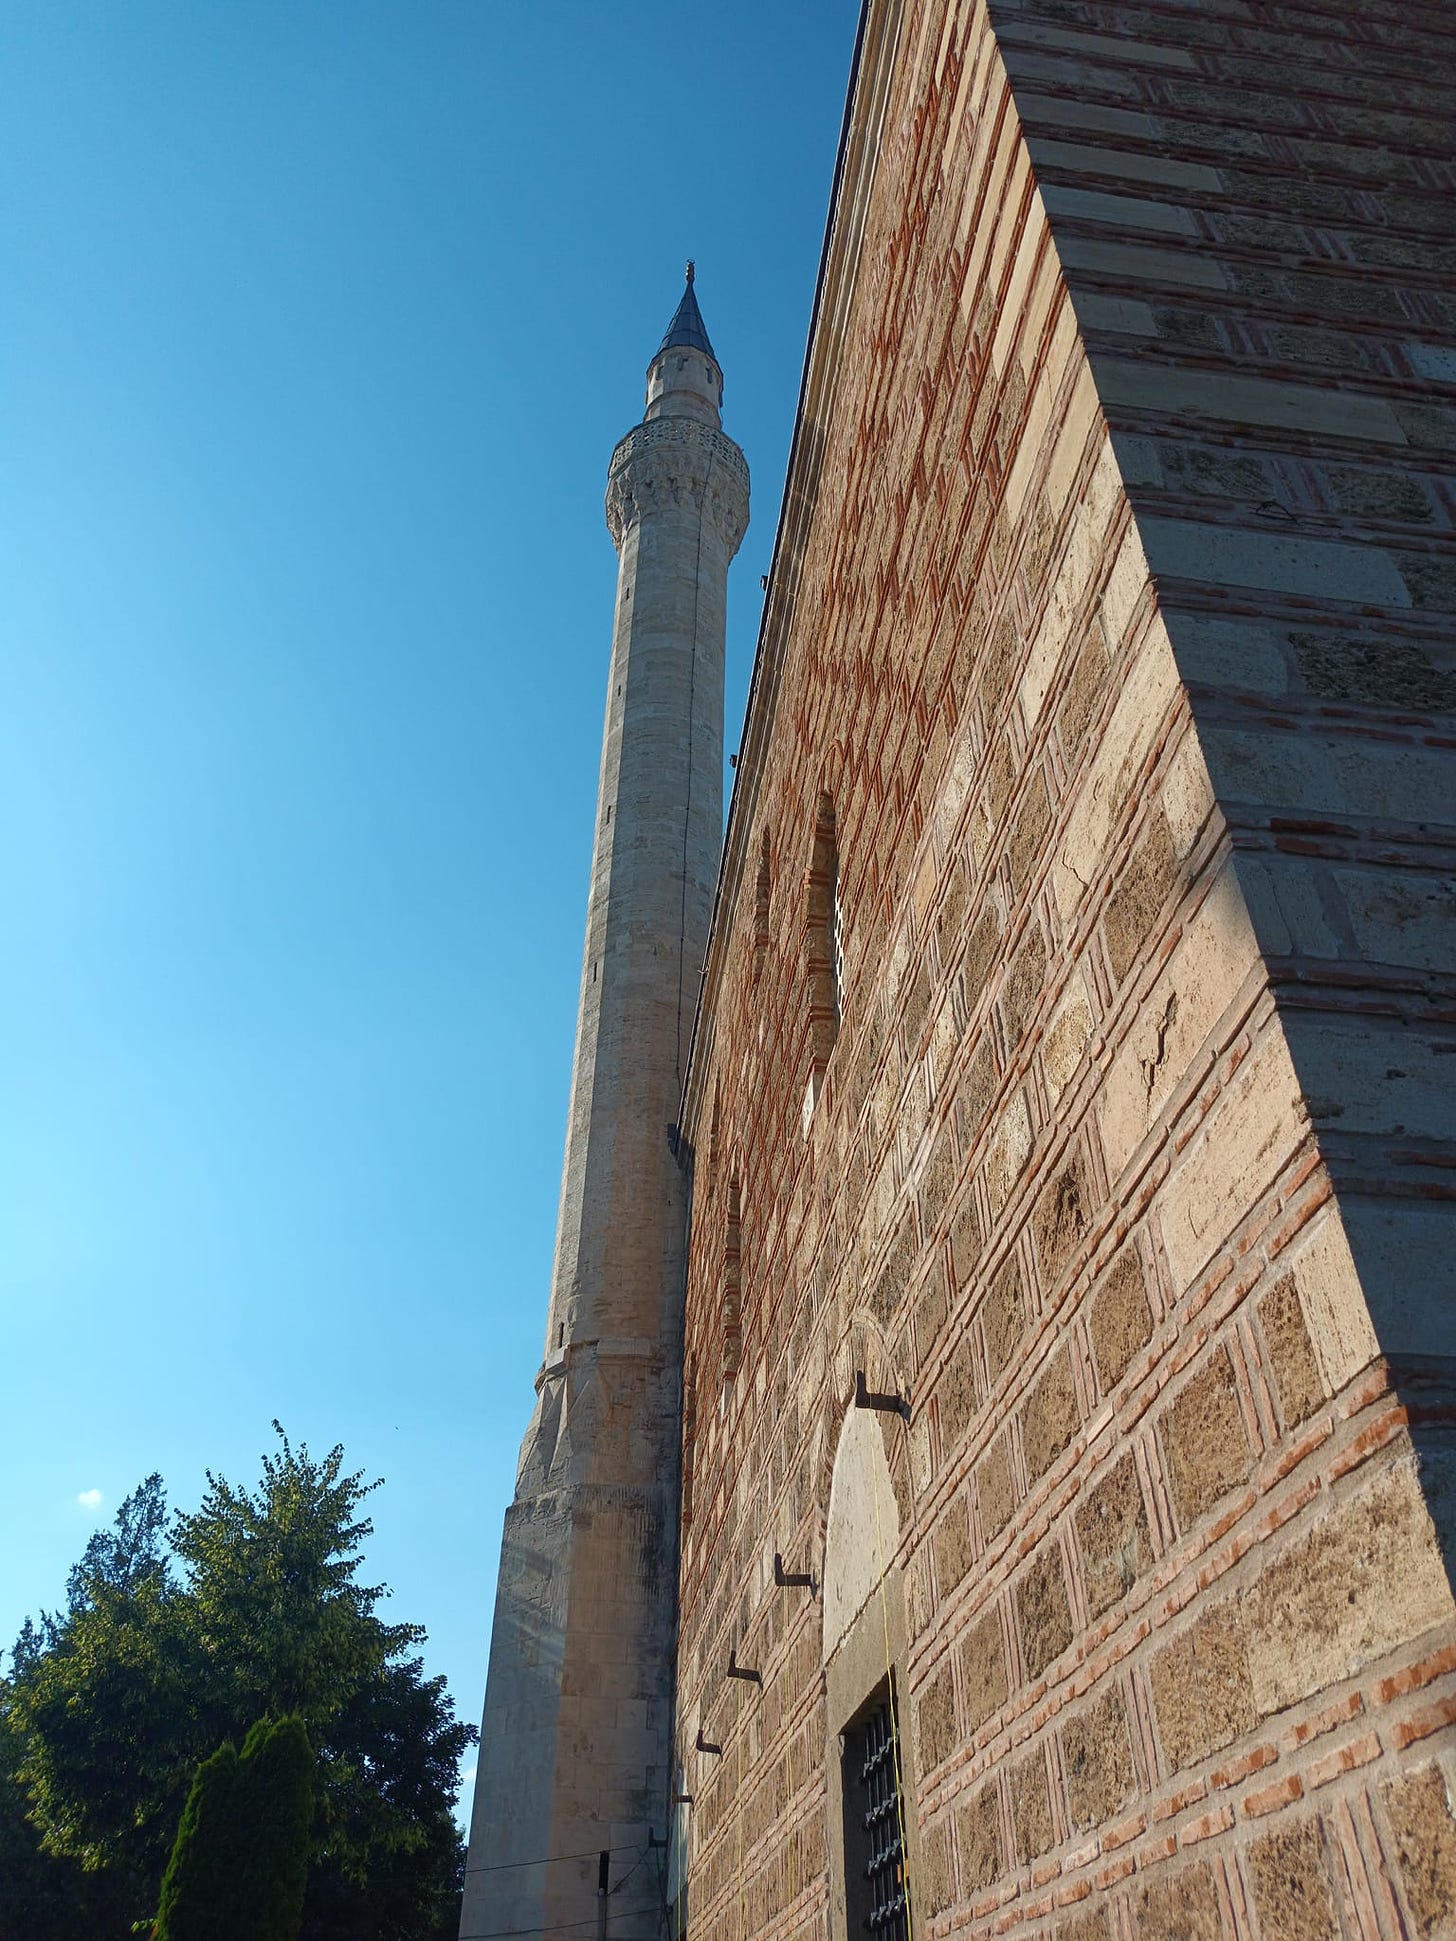 May be an image of the Qutub Minar